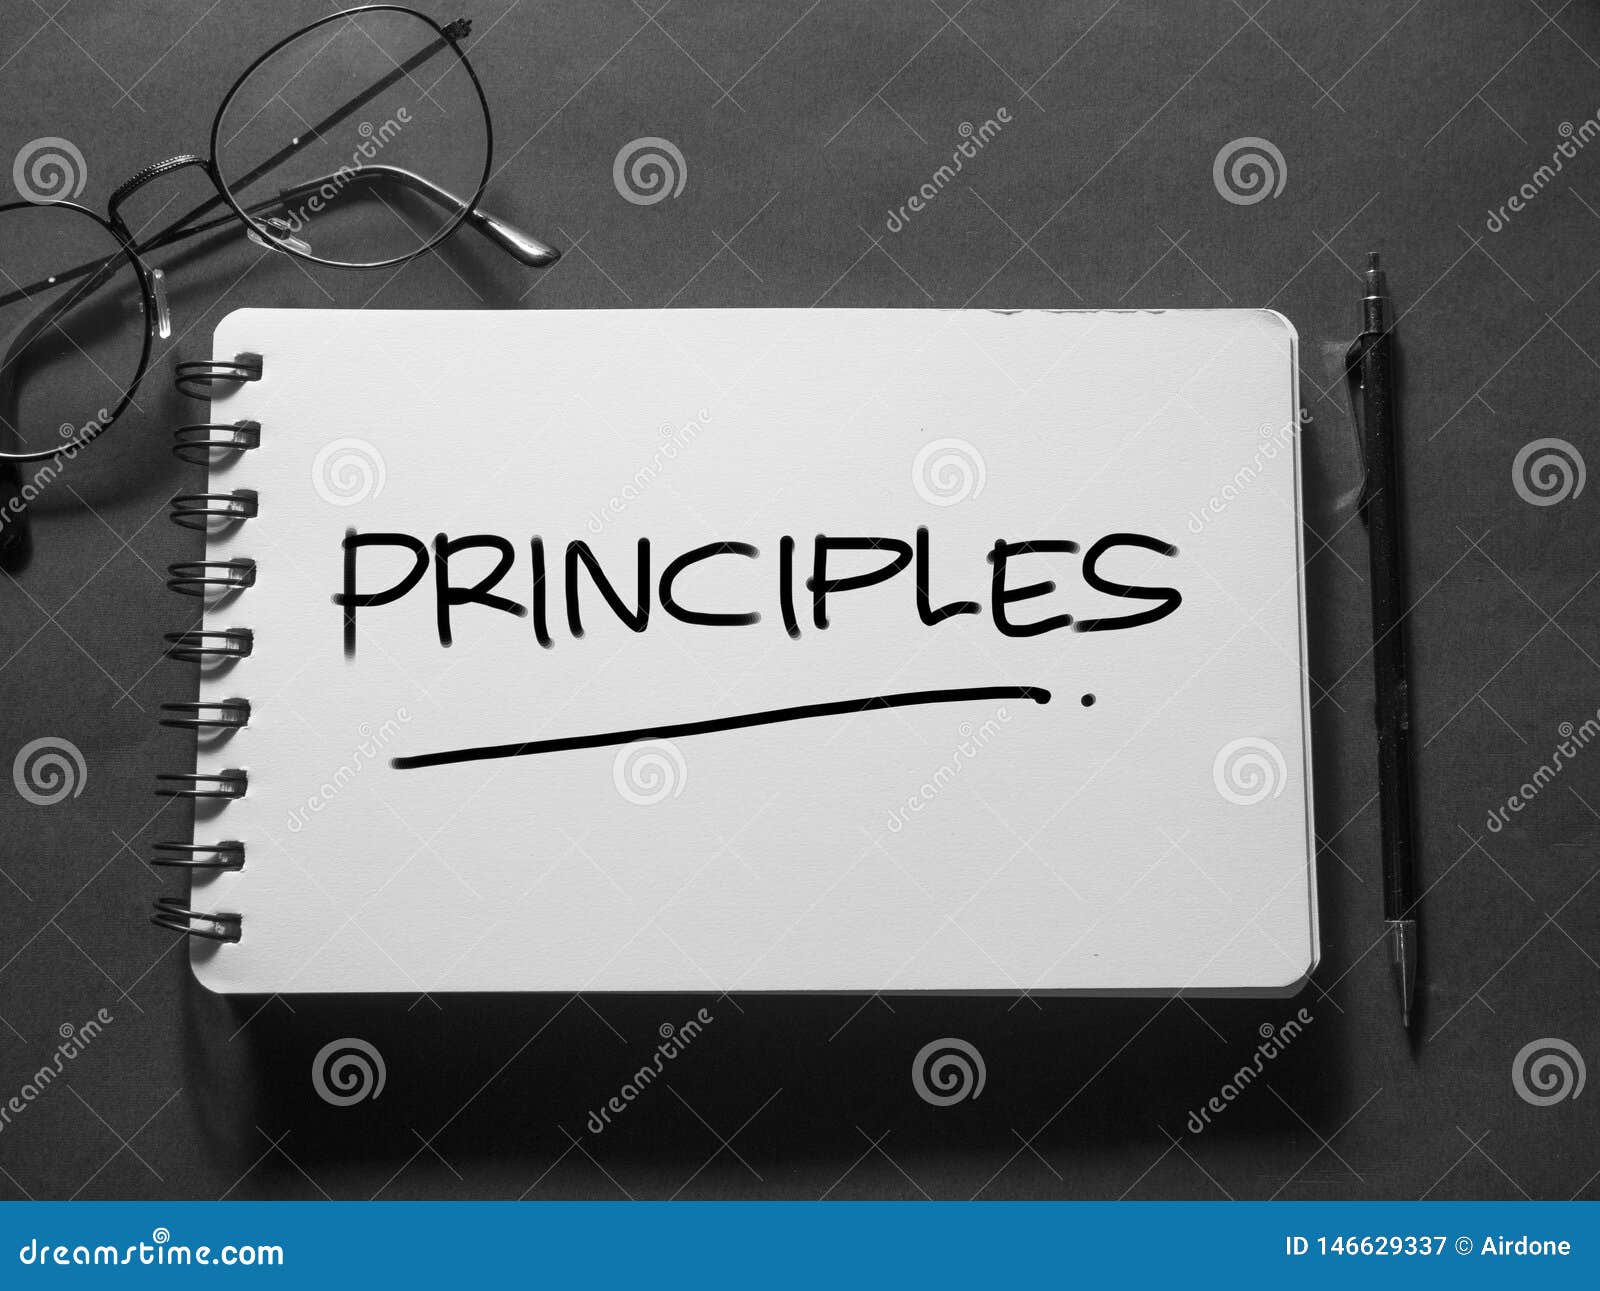 principles, motivational words quotes concept